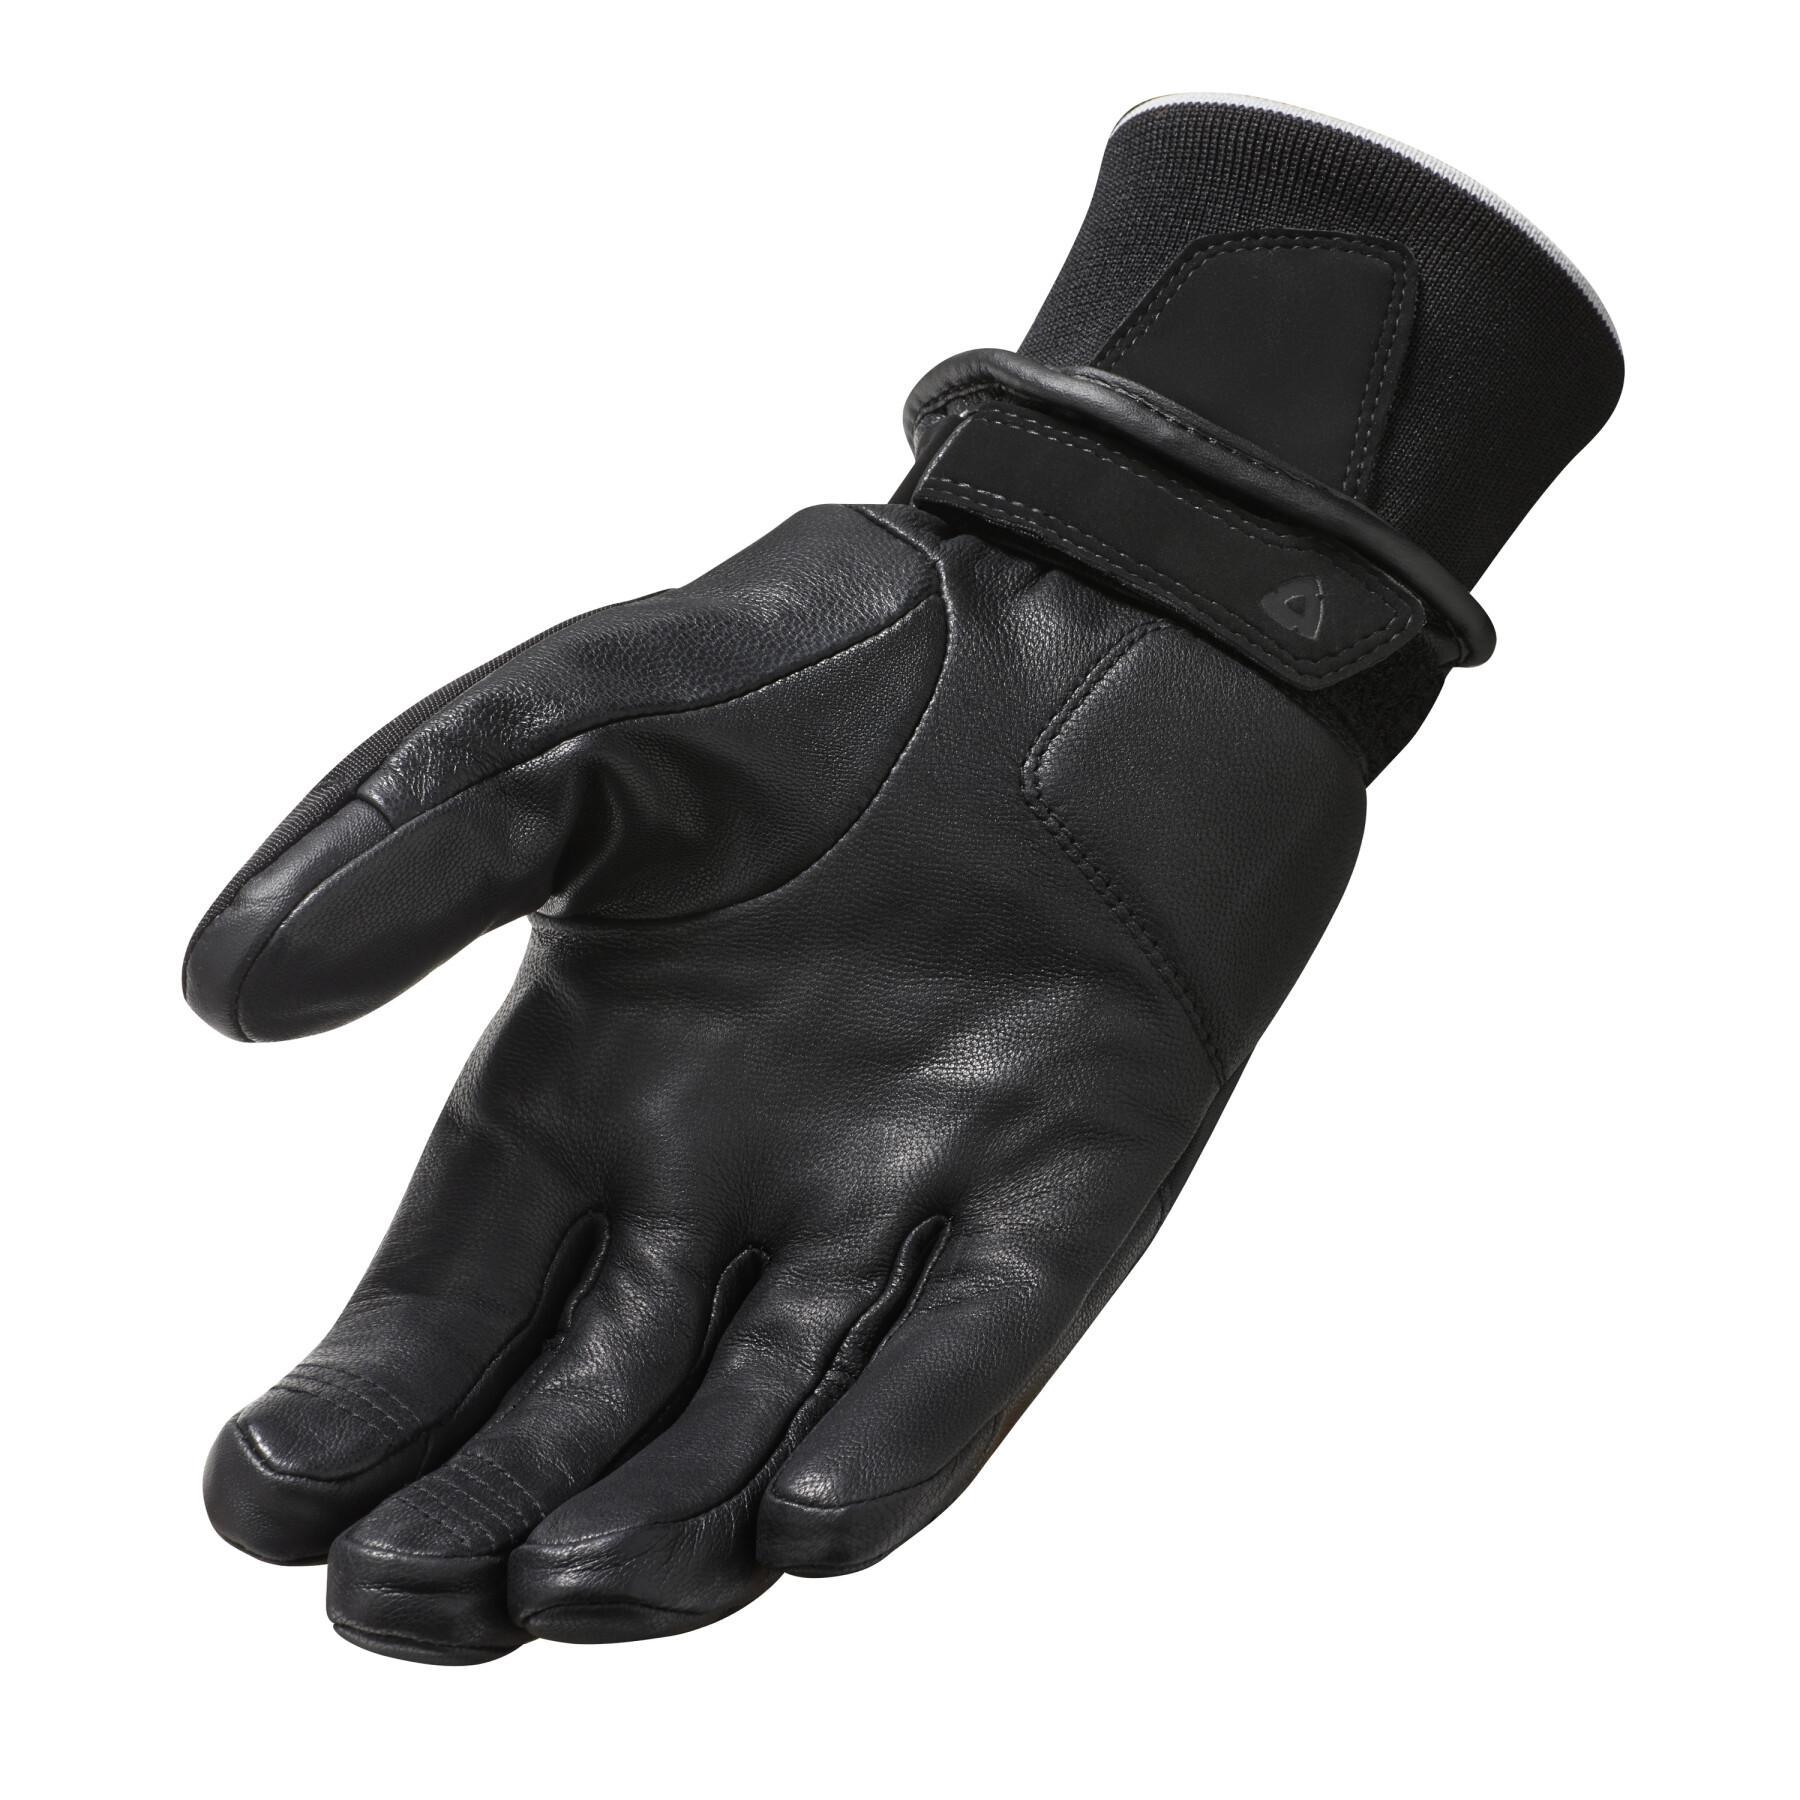 Winter motorcycle gloves Rev'it kryptonite 2 GTX